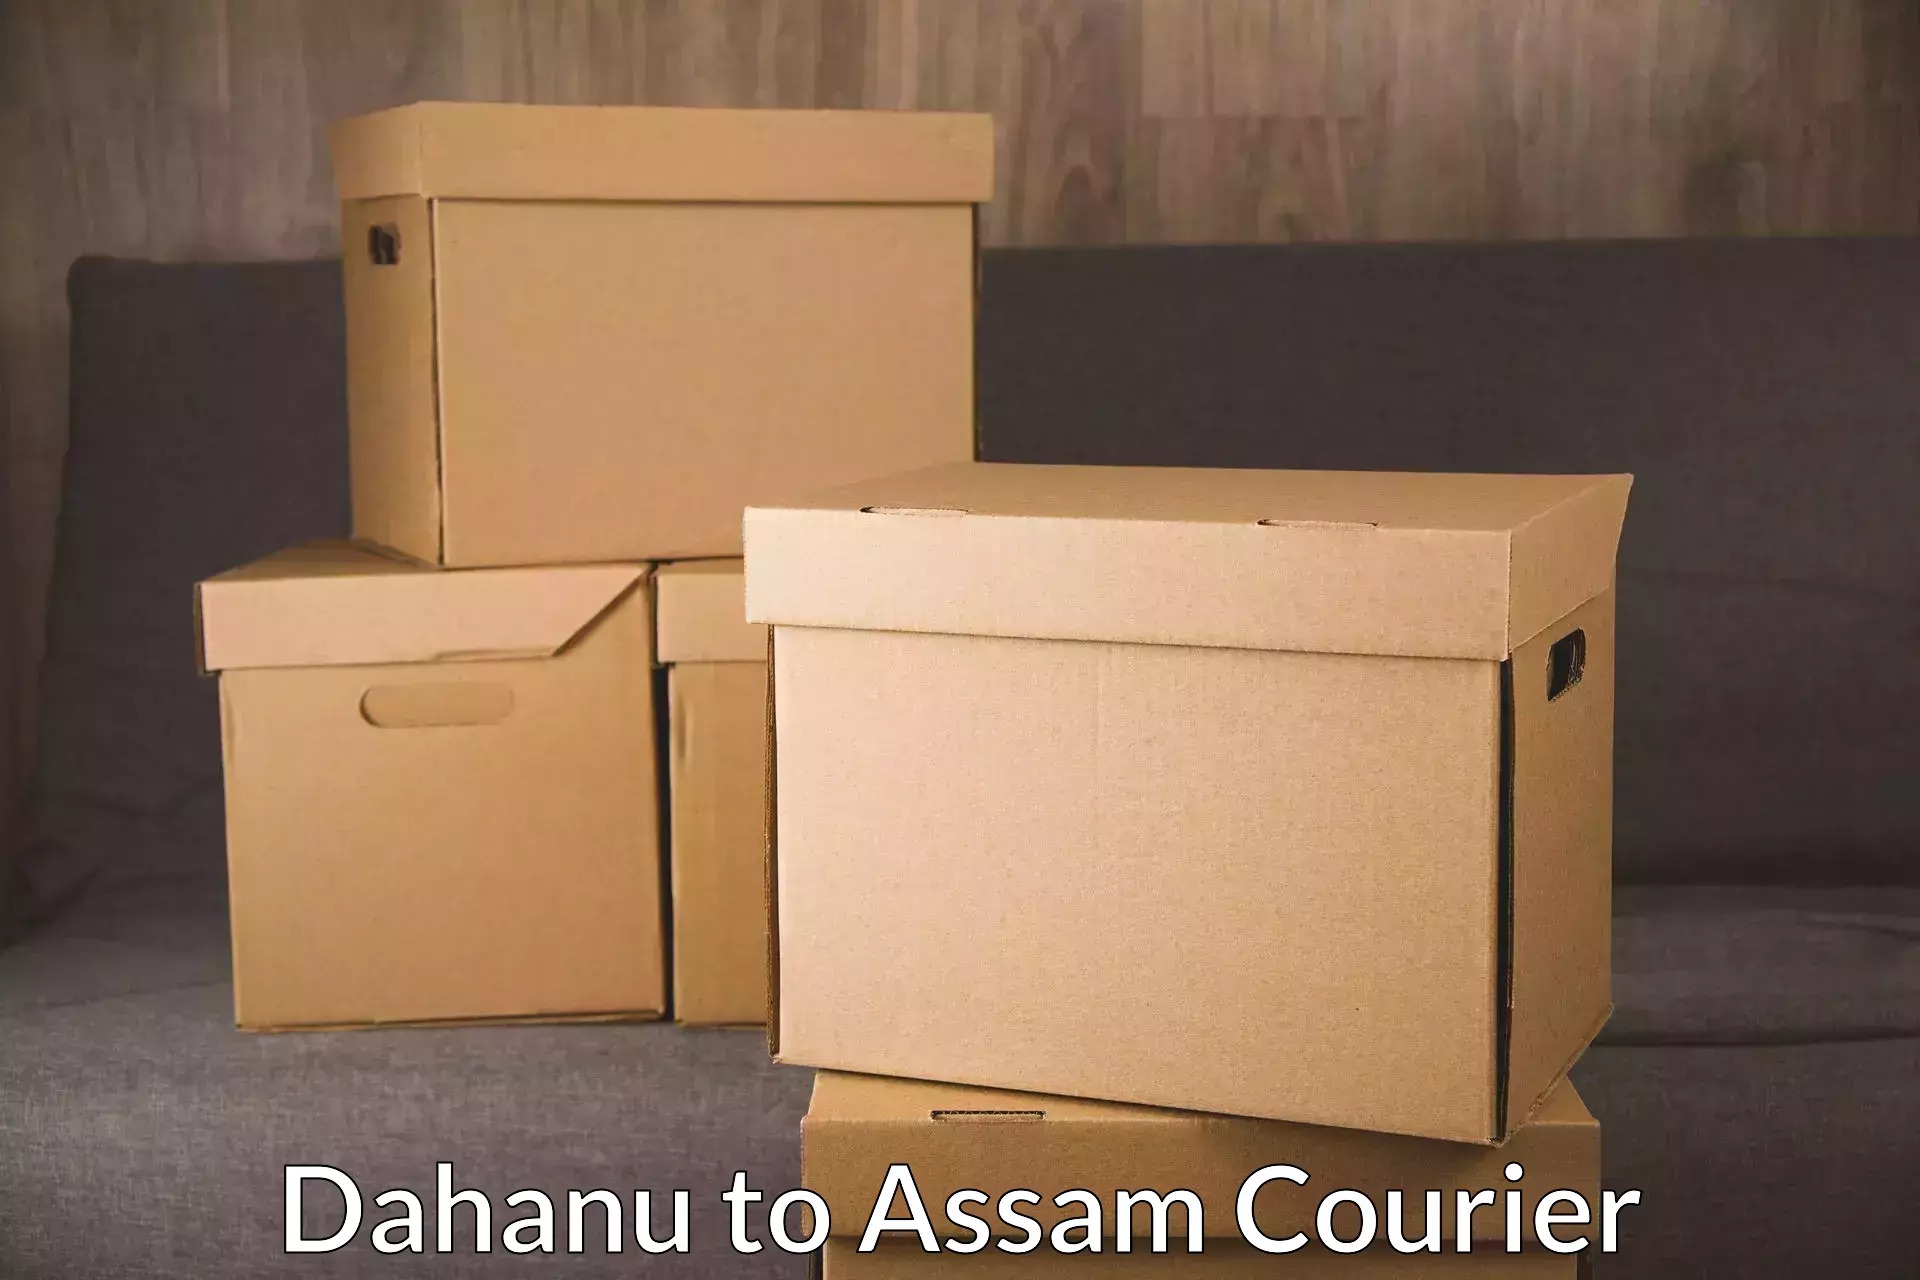 User-friendly courier app Dahanu to Pathsala